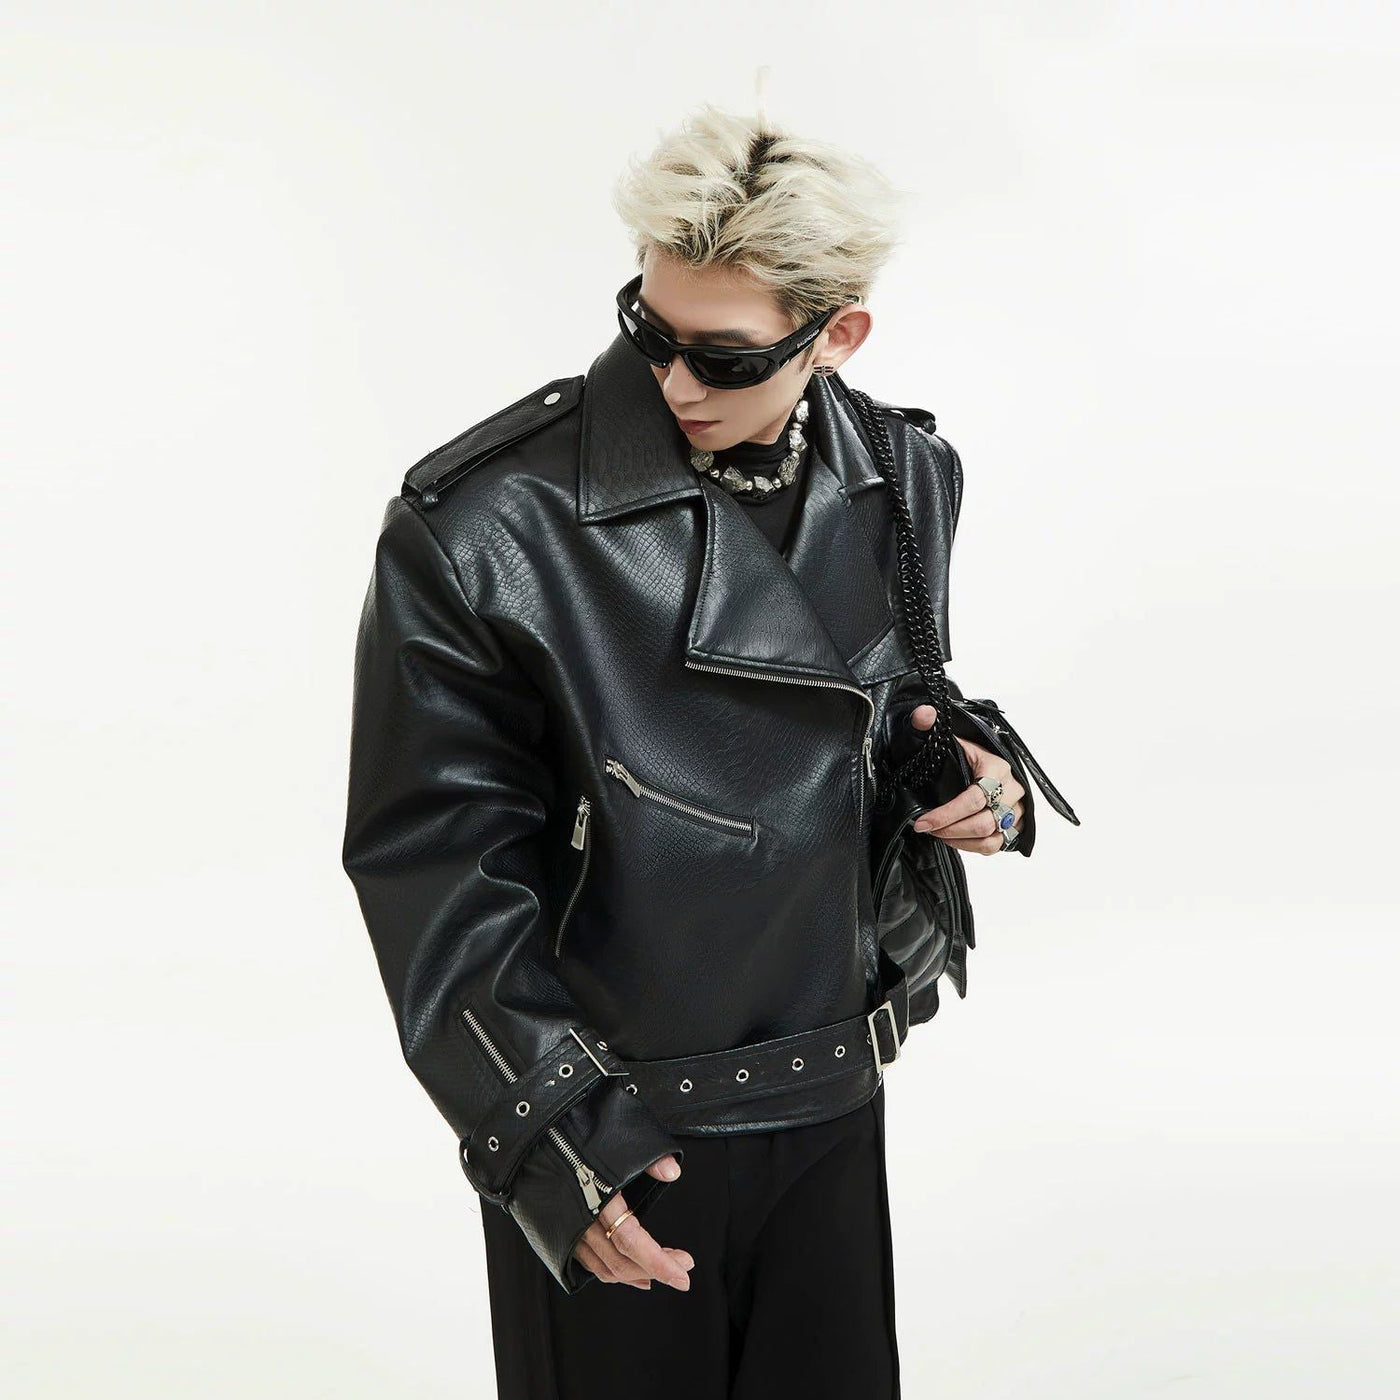 Textured Buckle Strap PU Leather Jacket Korean Street Fashion Jacket By Slim Black Shop Online at OH Vault